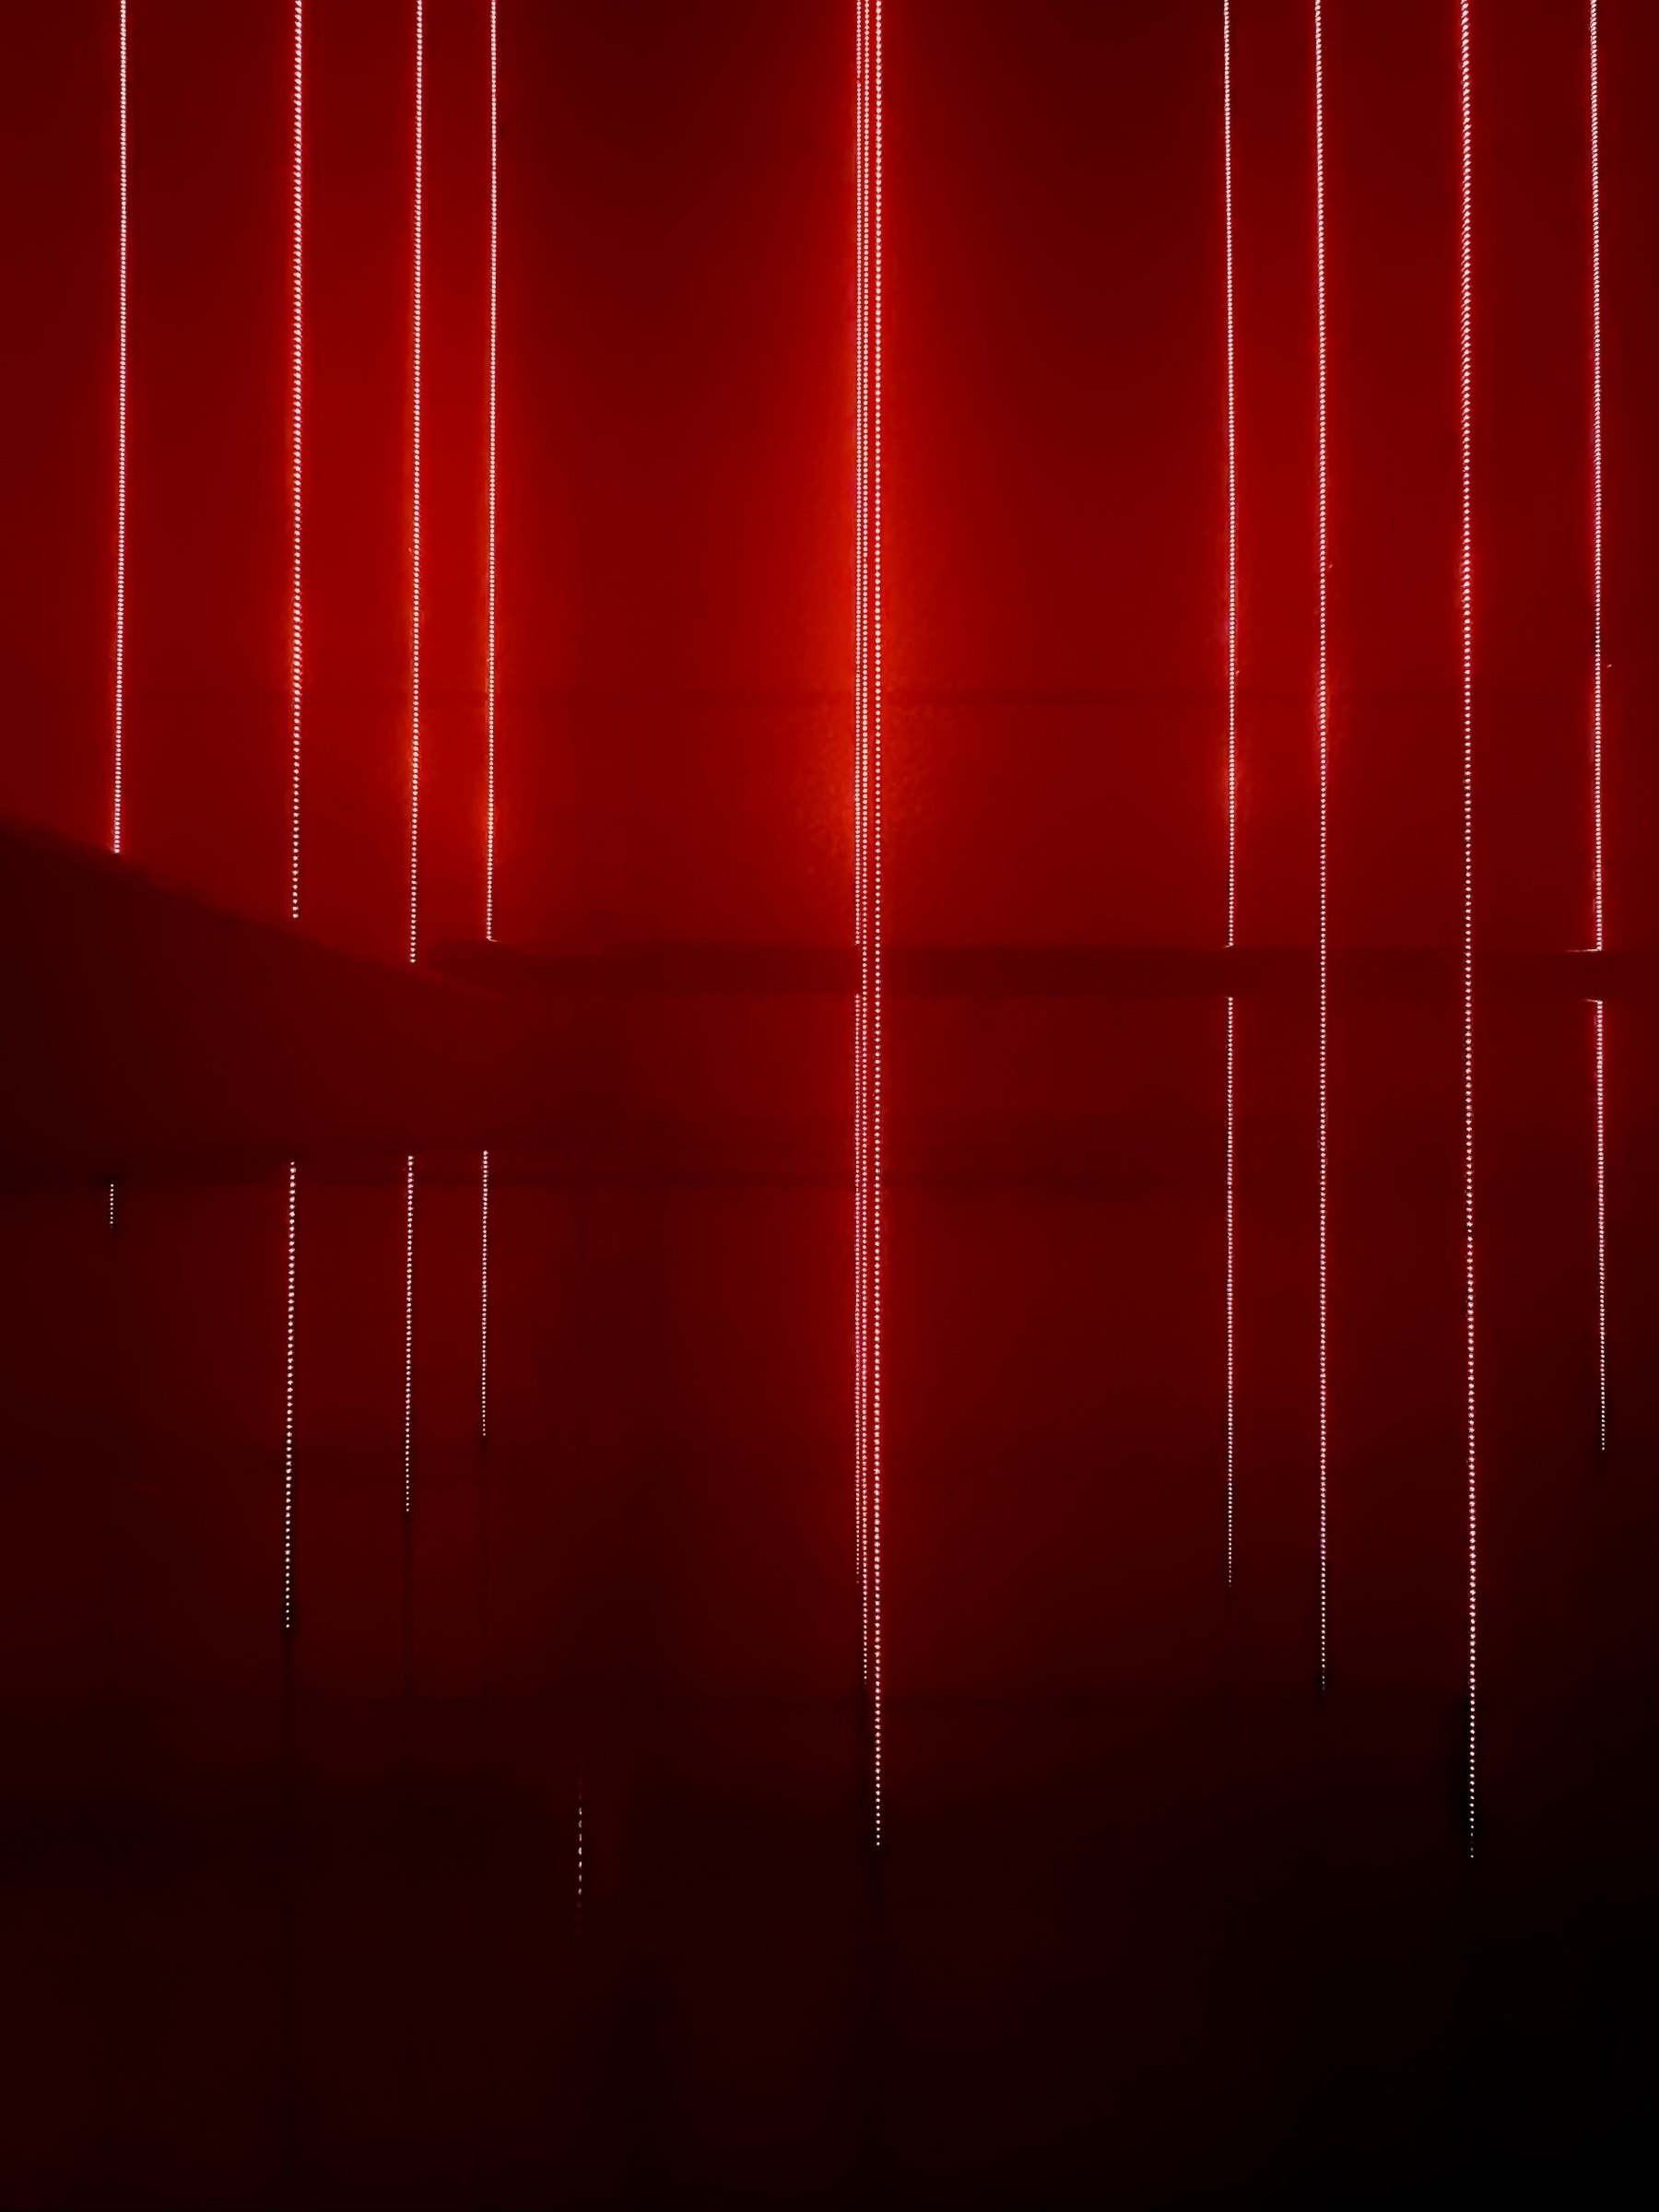 Vertical red stripes of LED light in a dark room.